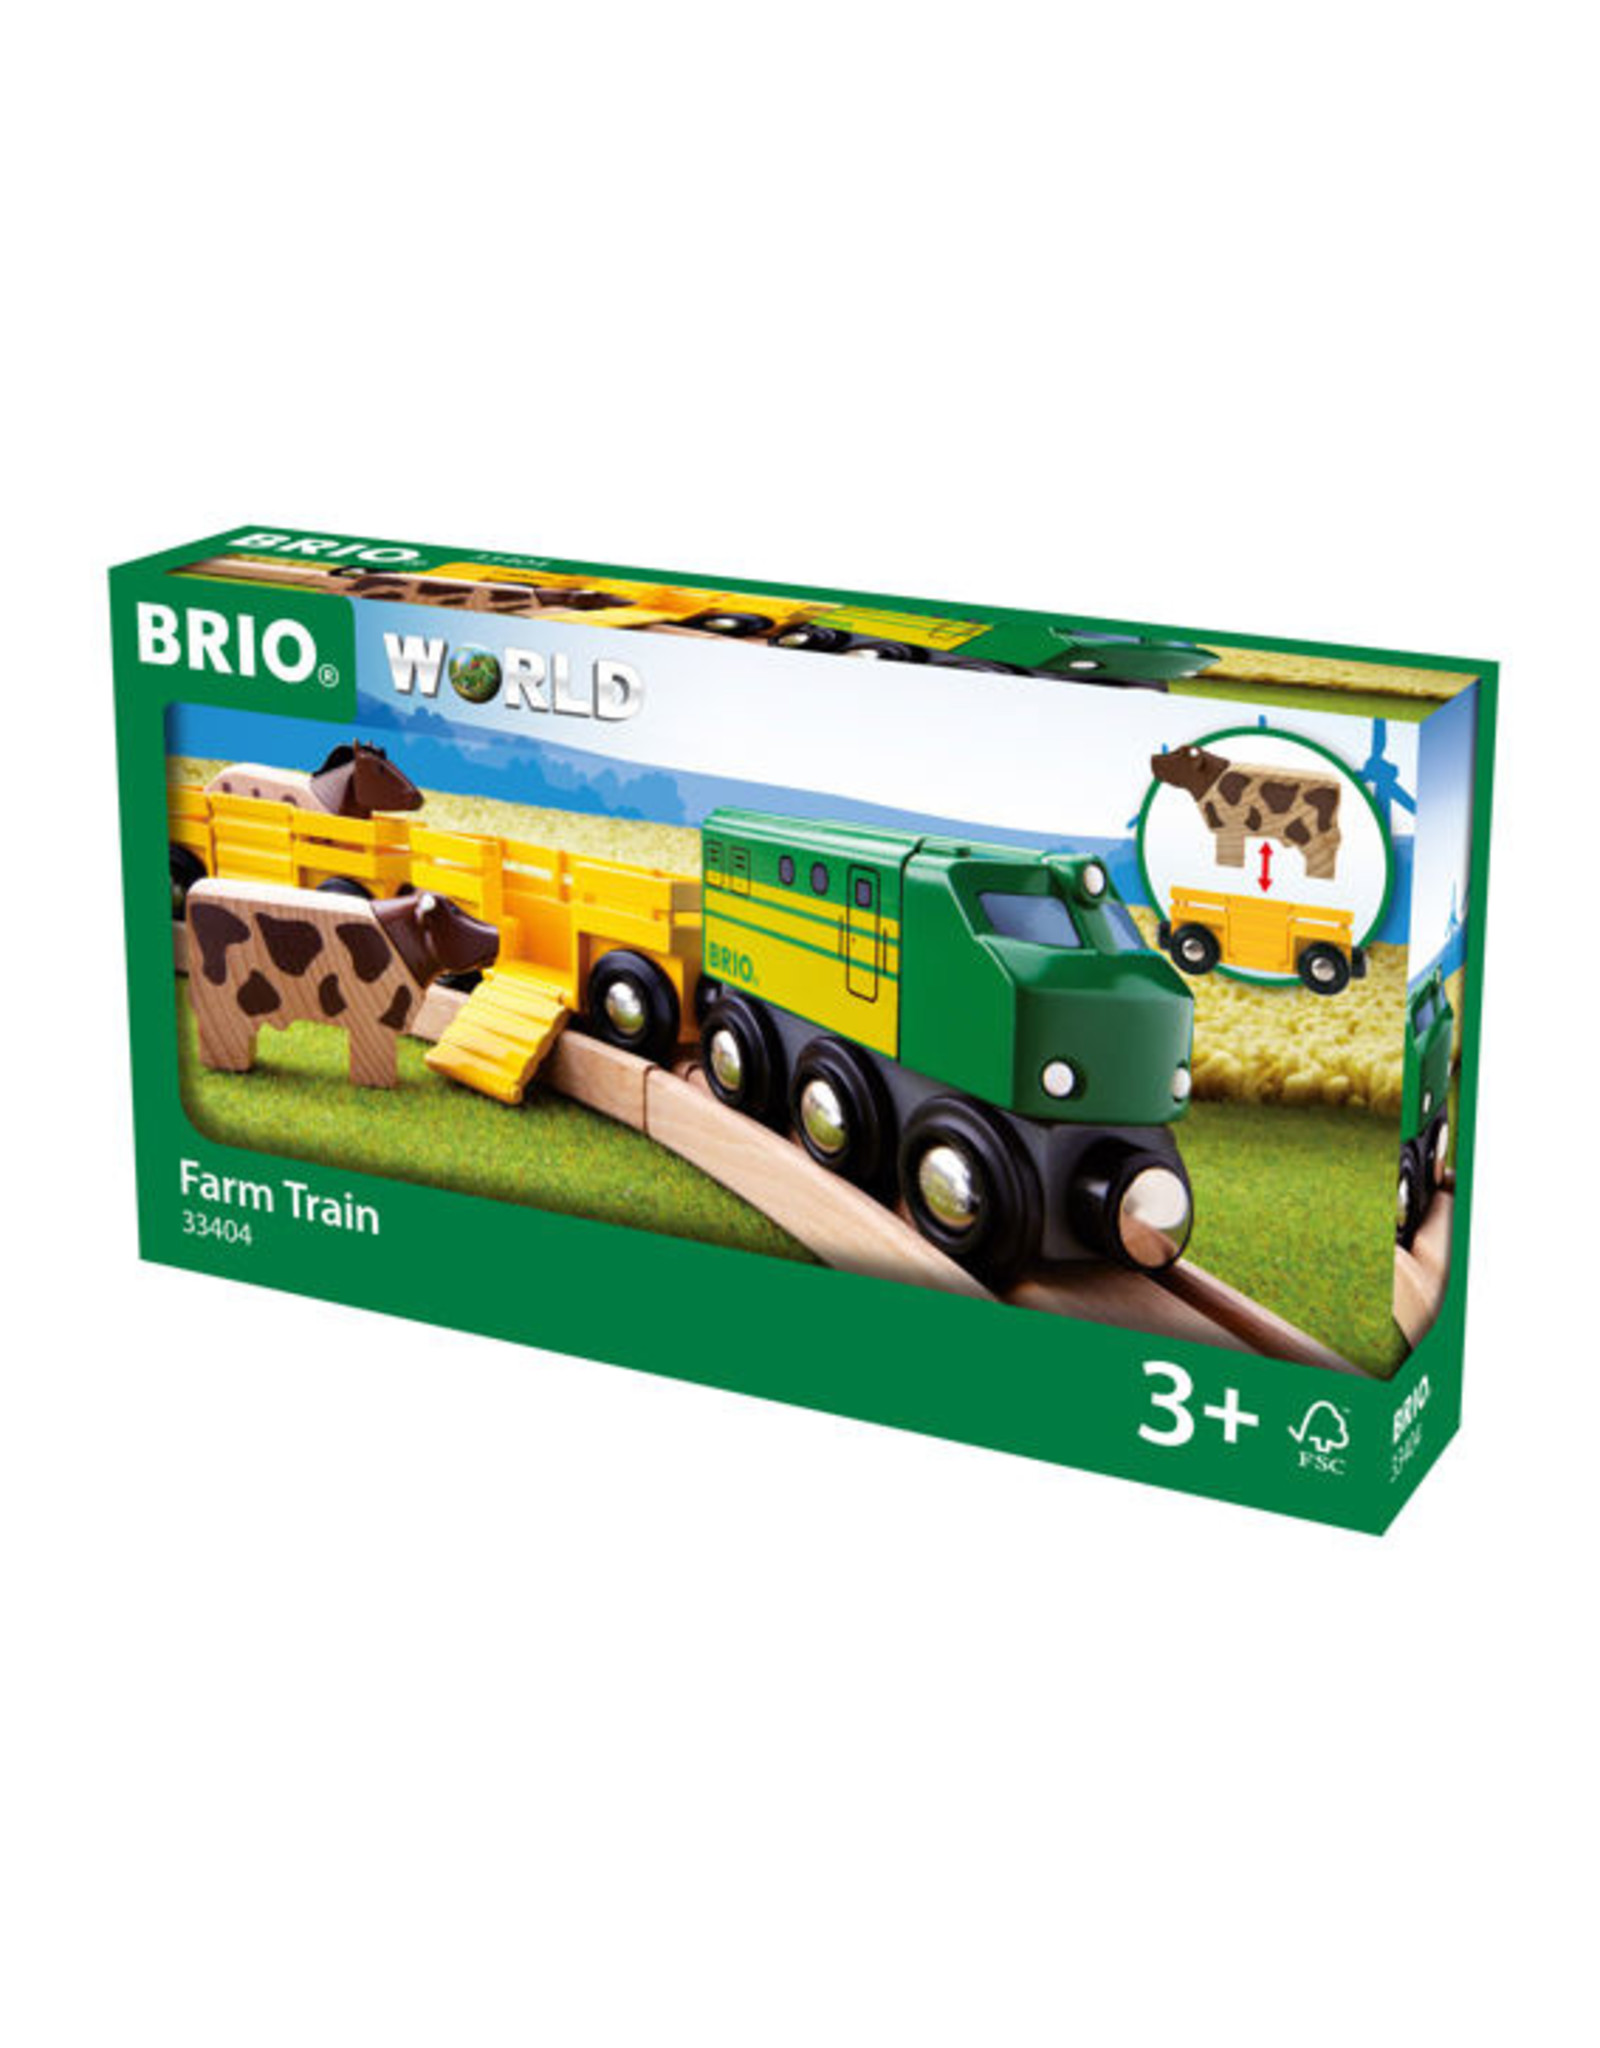 BRIO Farm Train Set